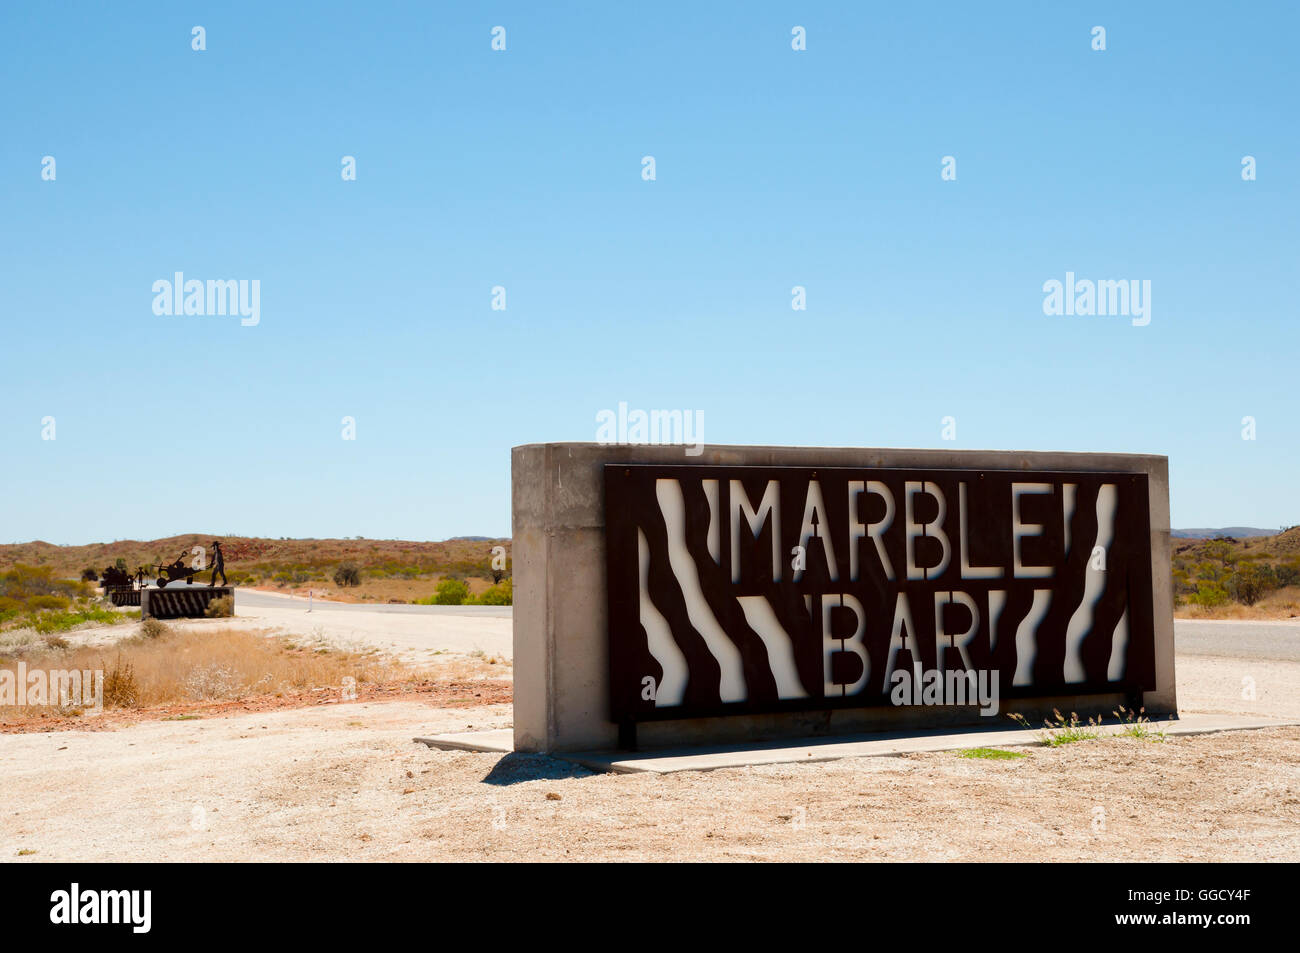 Marble Bar Sign - Australia Stock Photo